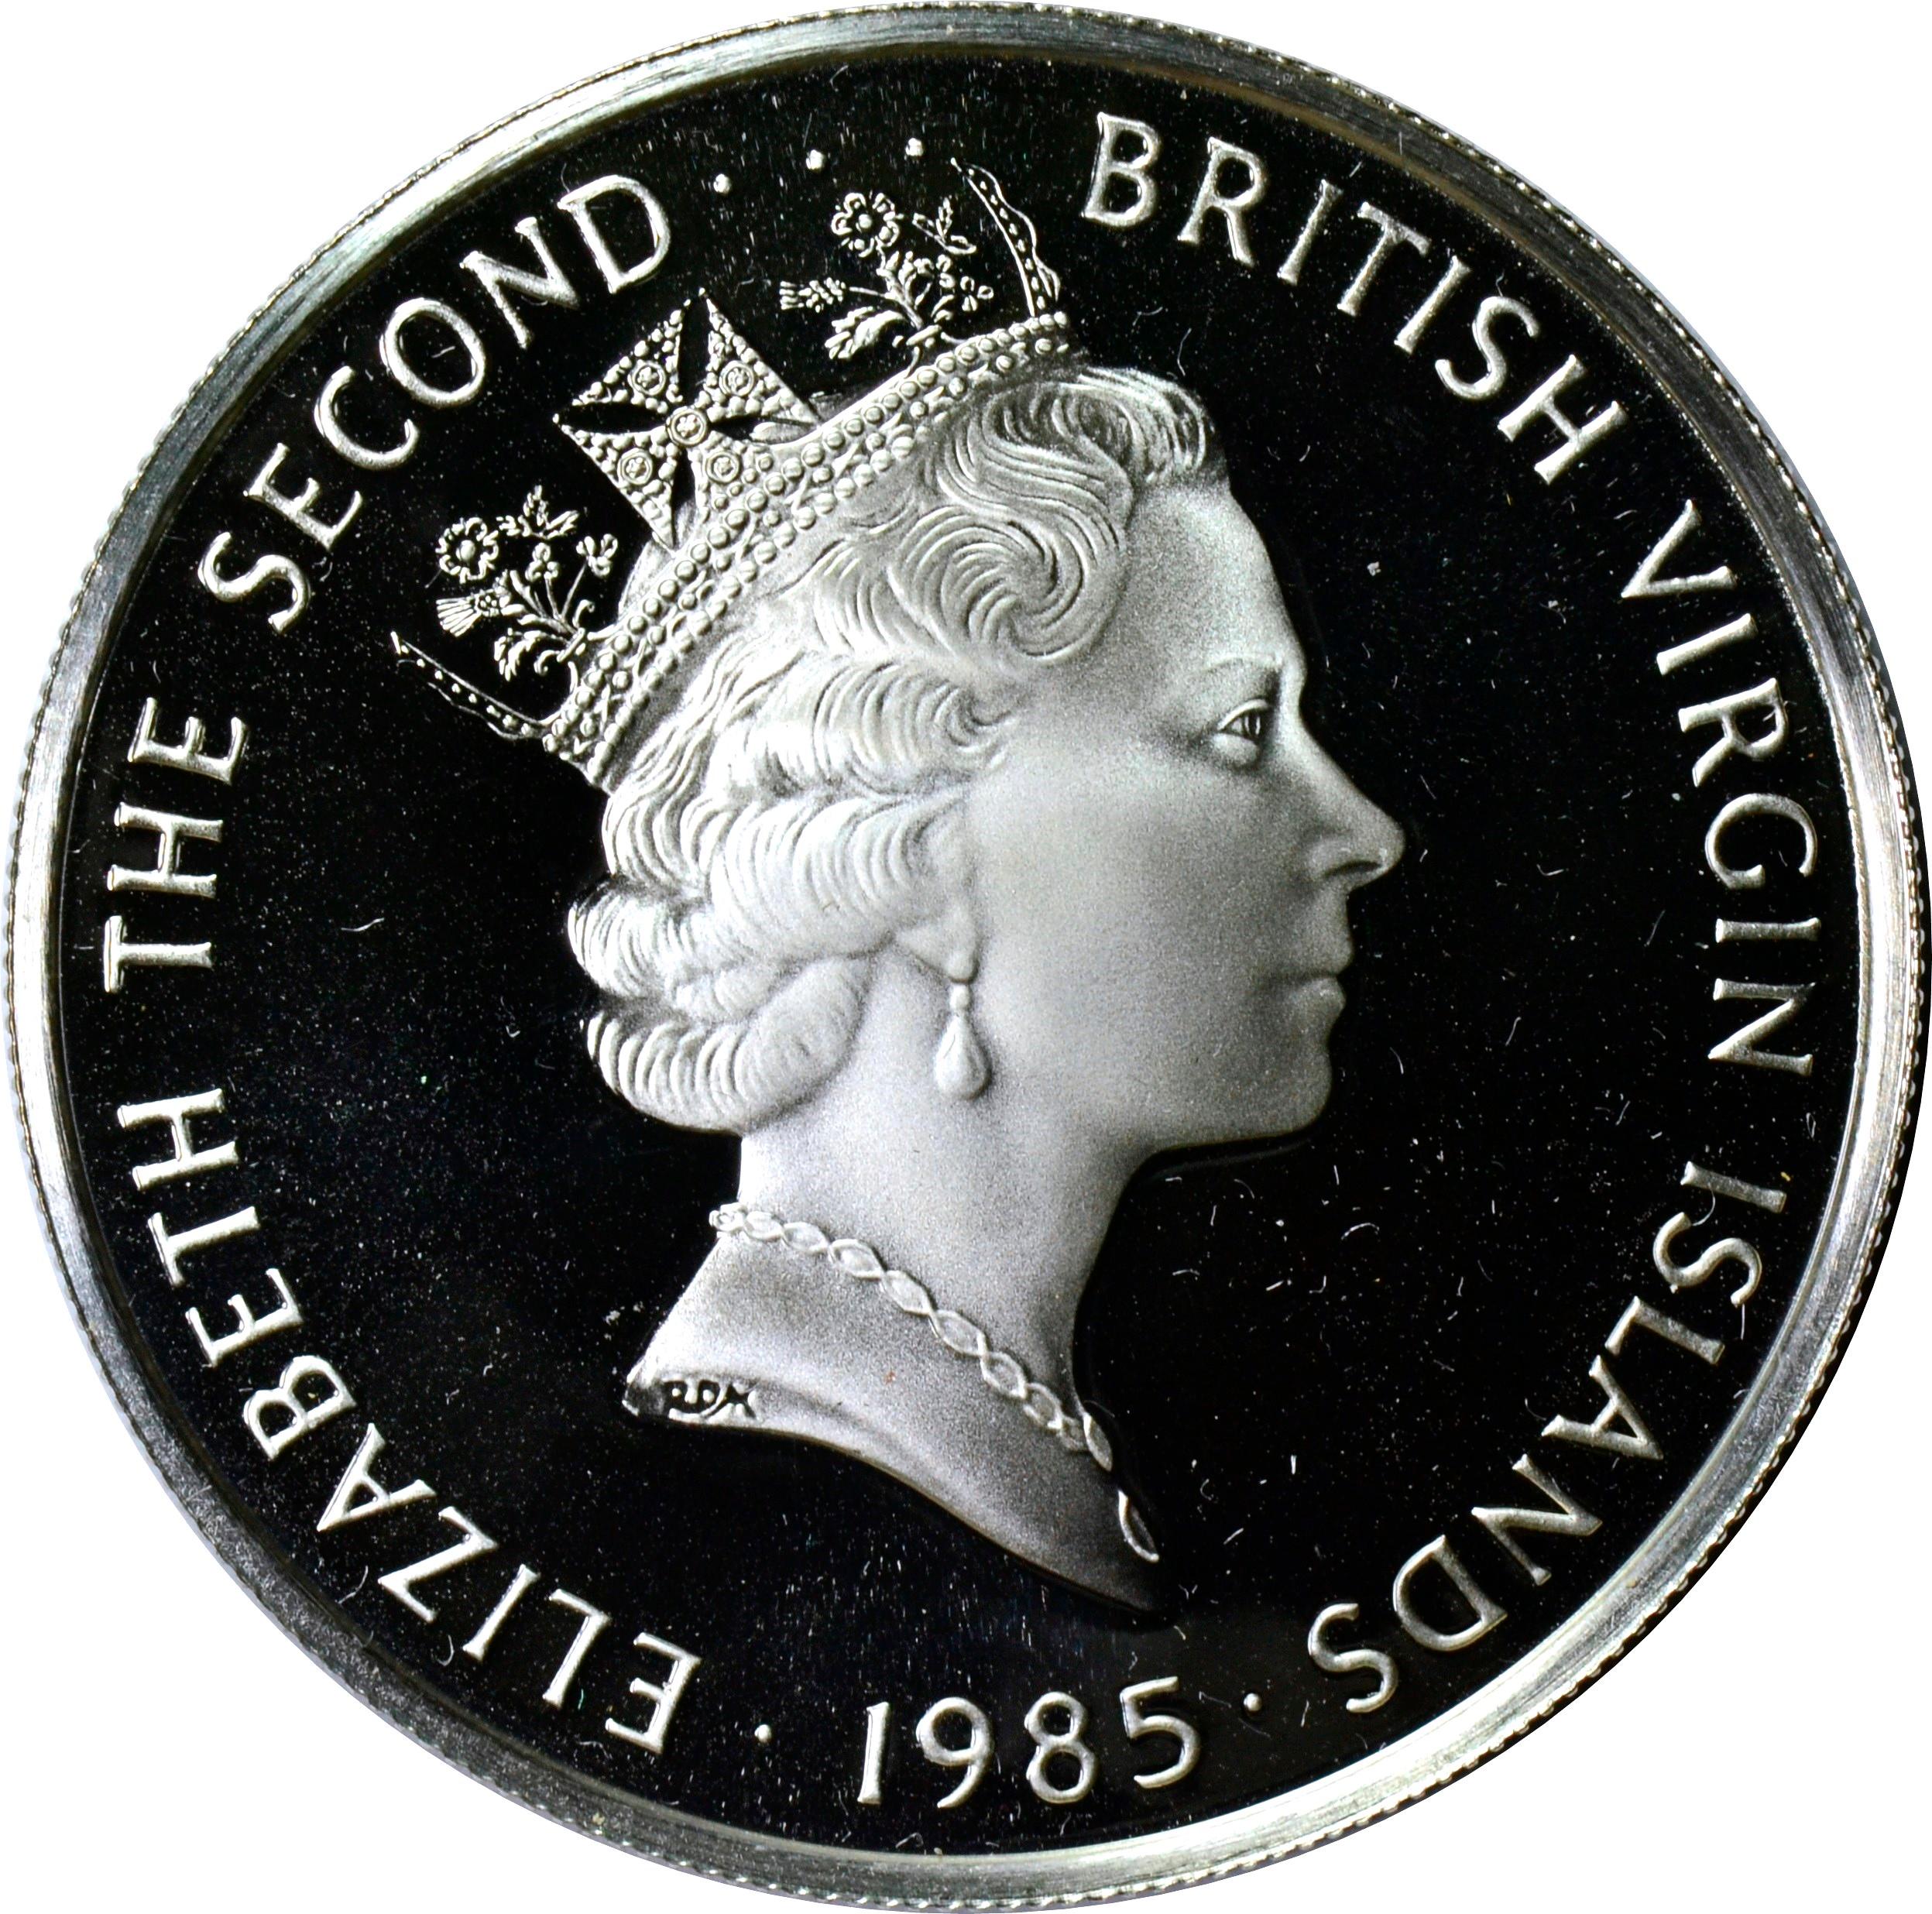 BRITISH VIRGIN ISLANDS - 1985 SILVER PROOF TWENTY DOLLARS